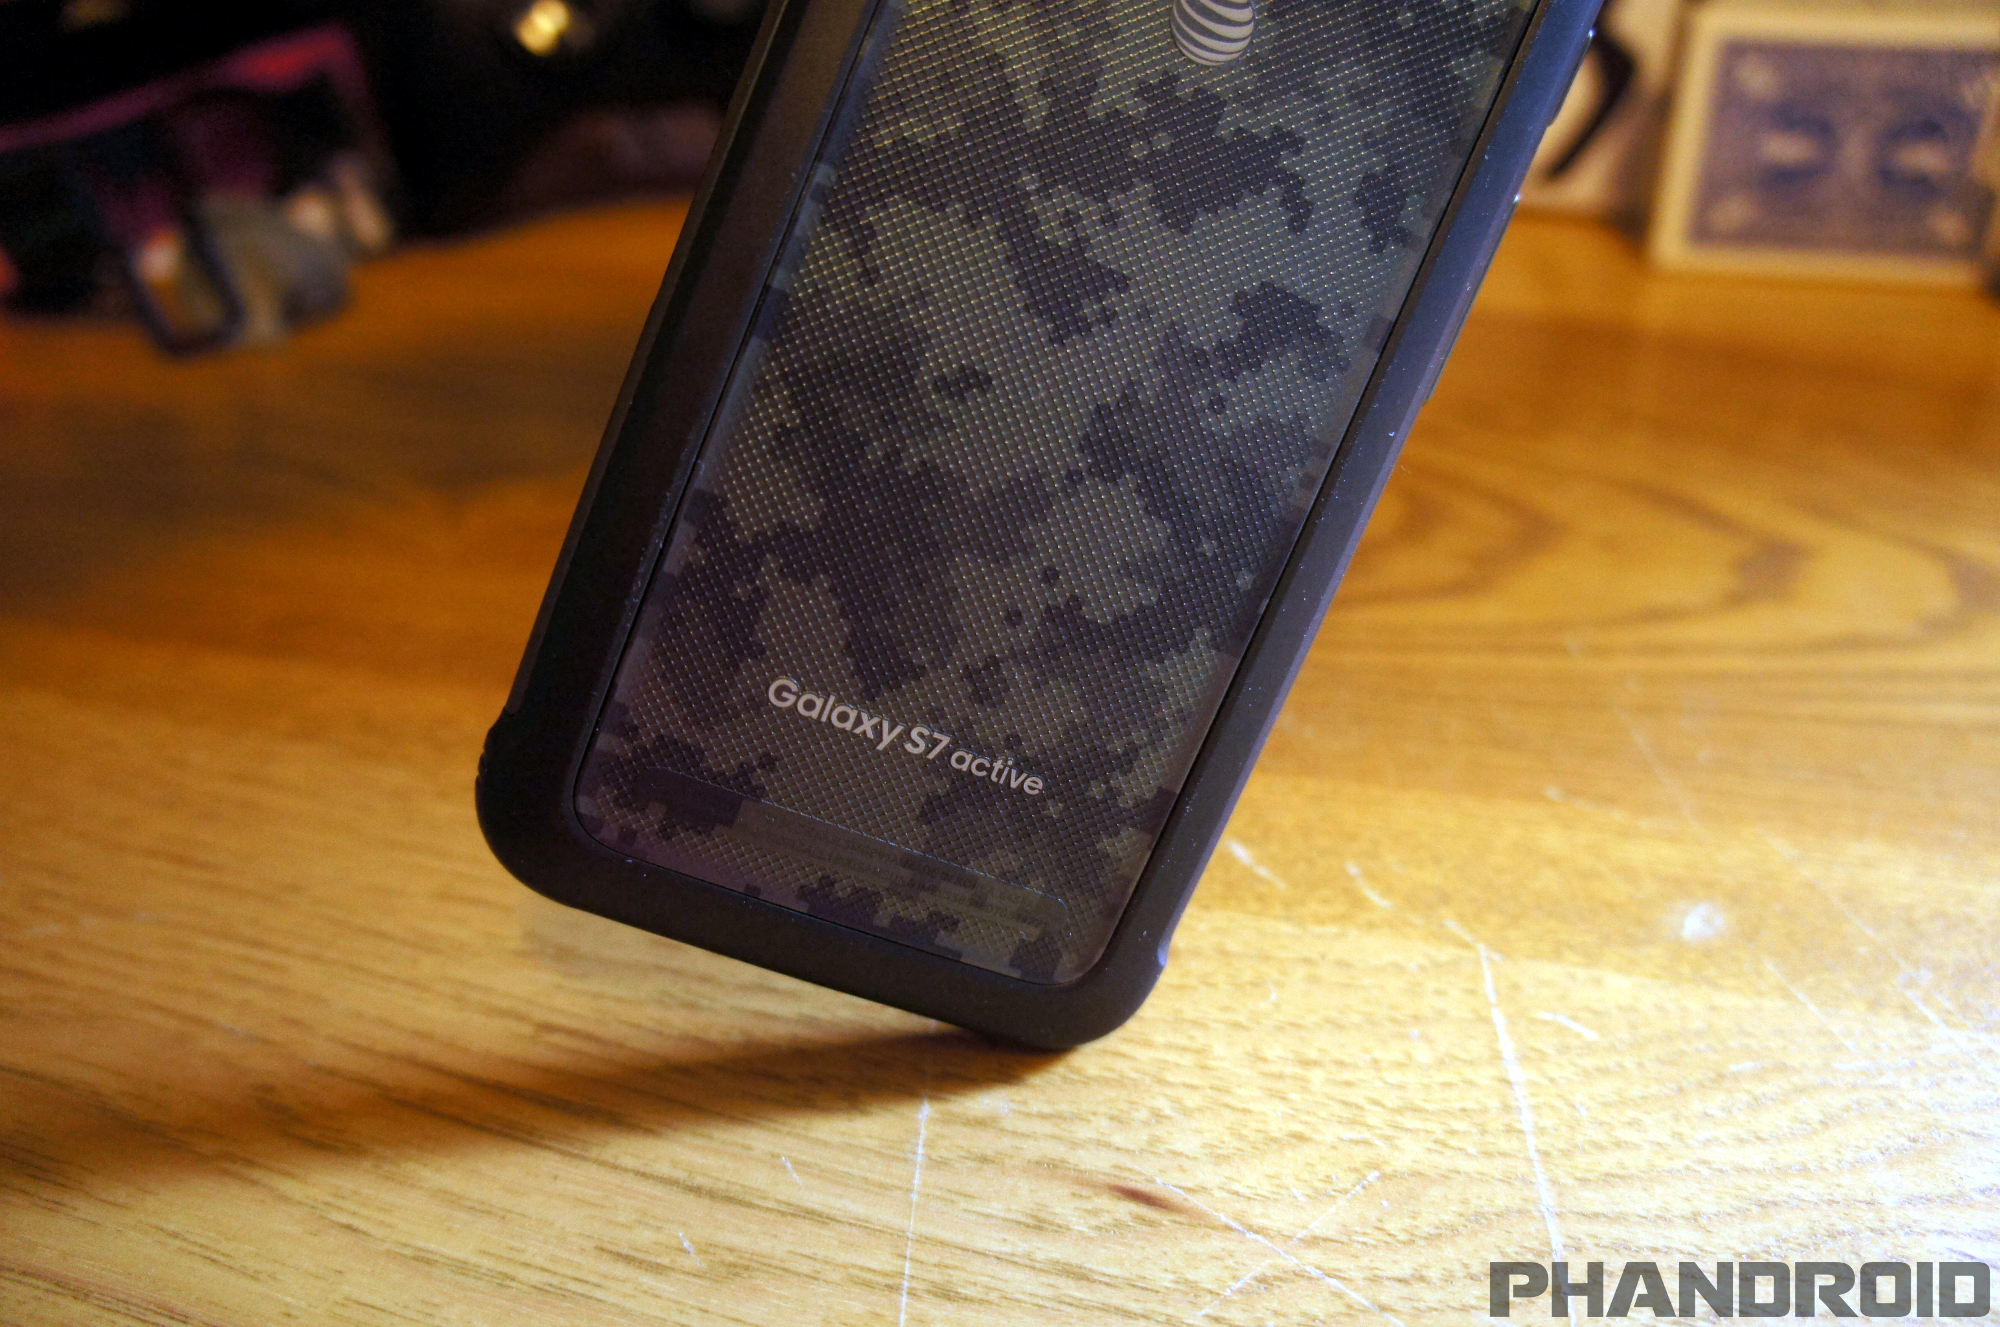 Vergelijken Hobart Grand 14 tips every Samsung Galaxy S7 Active owner should know – Phandroid